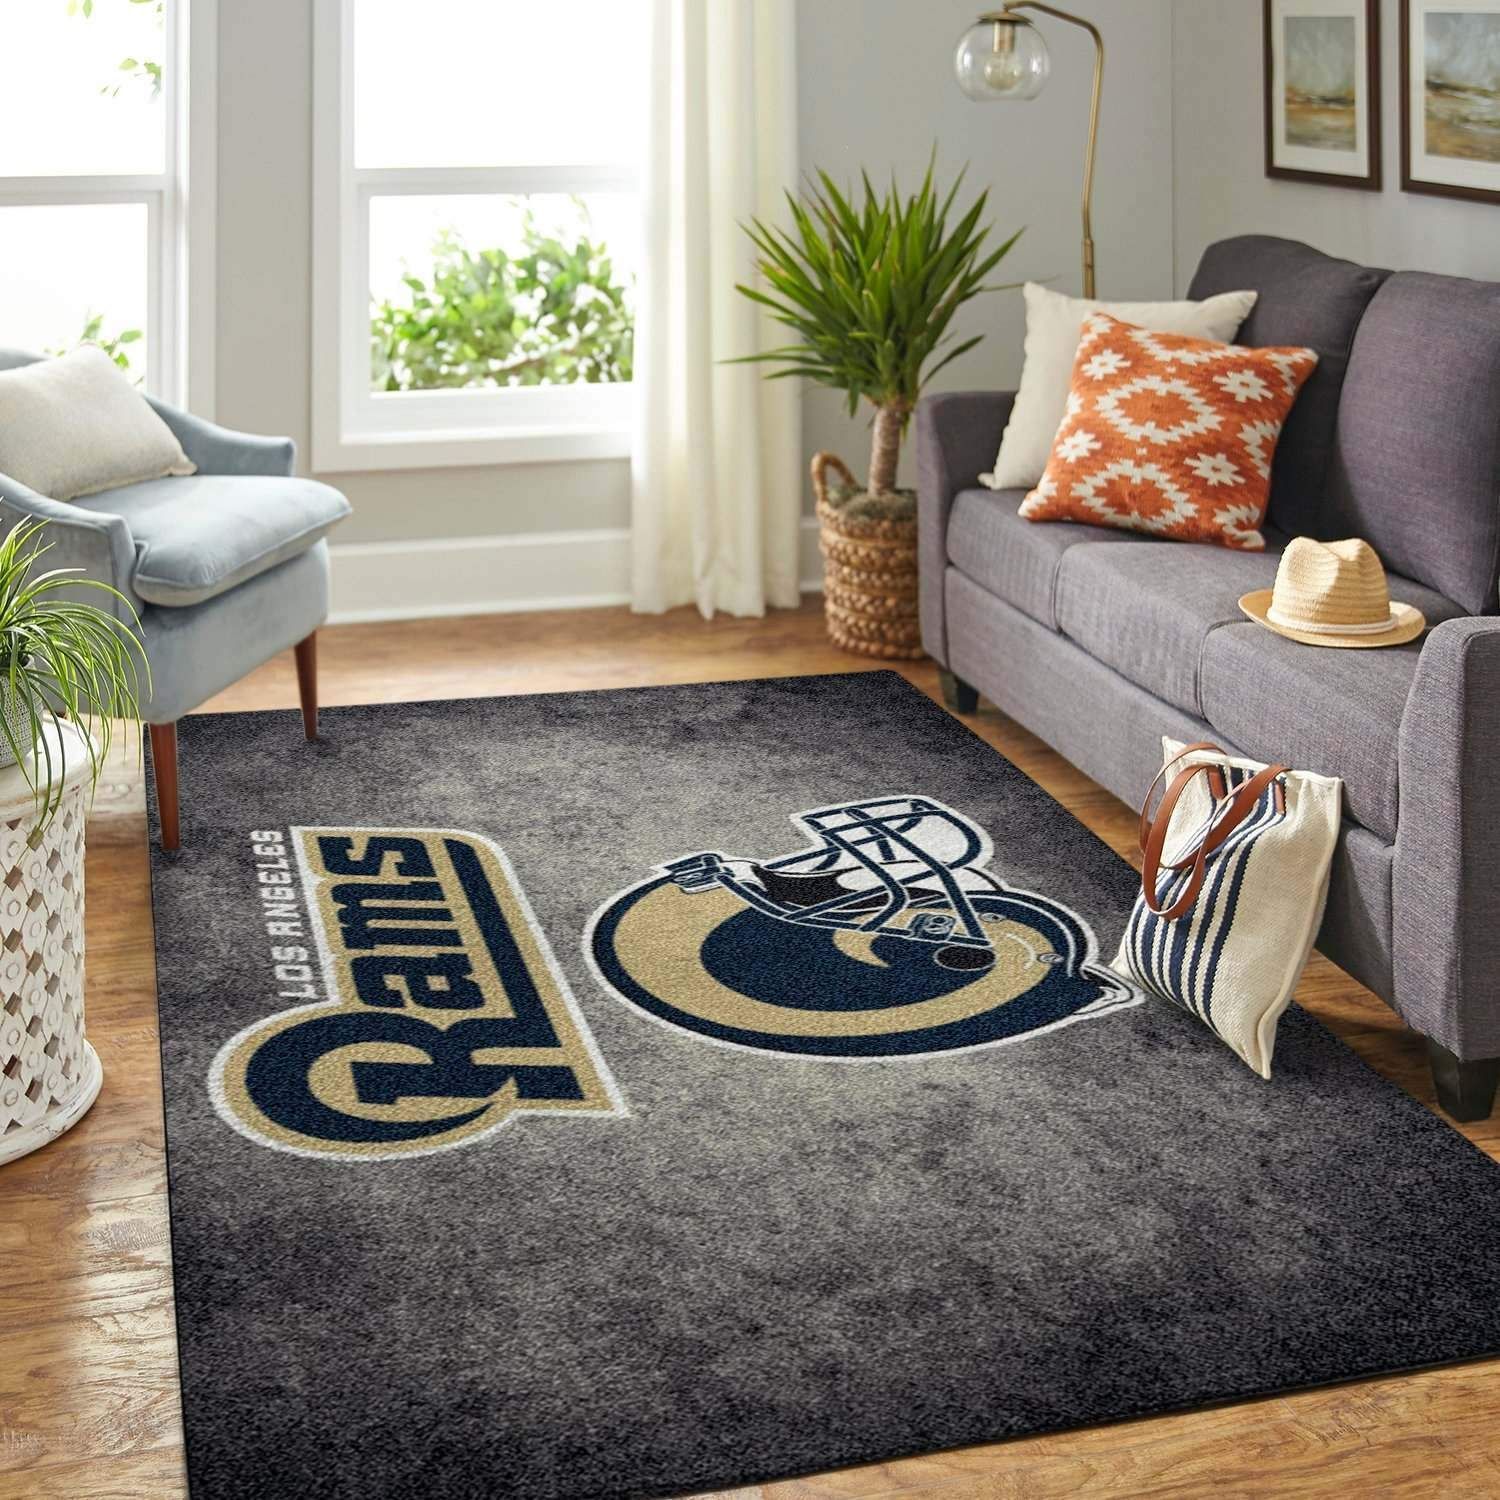 Nfl Football Team Los Angeles Rams Area Floor home decoration carpet rug